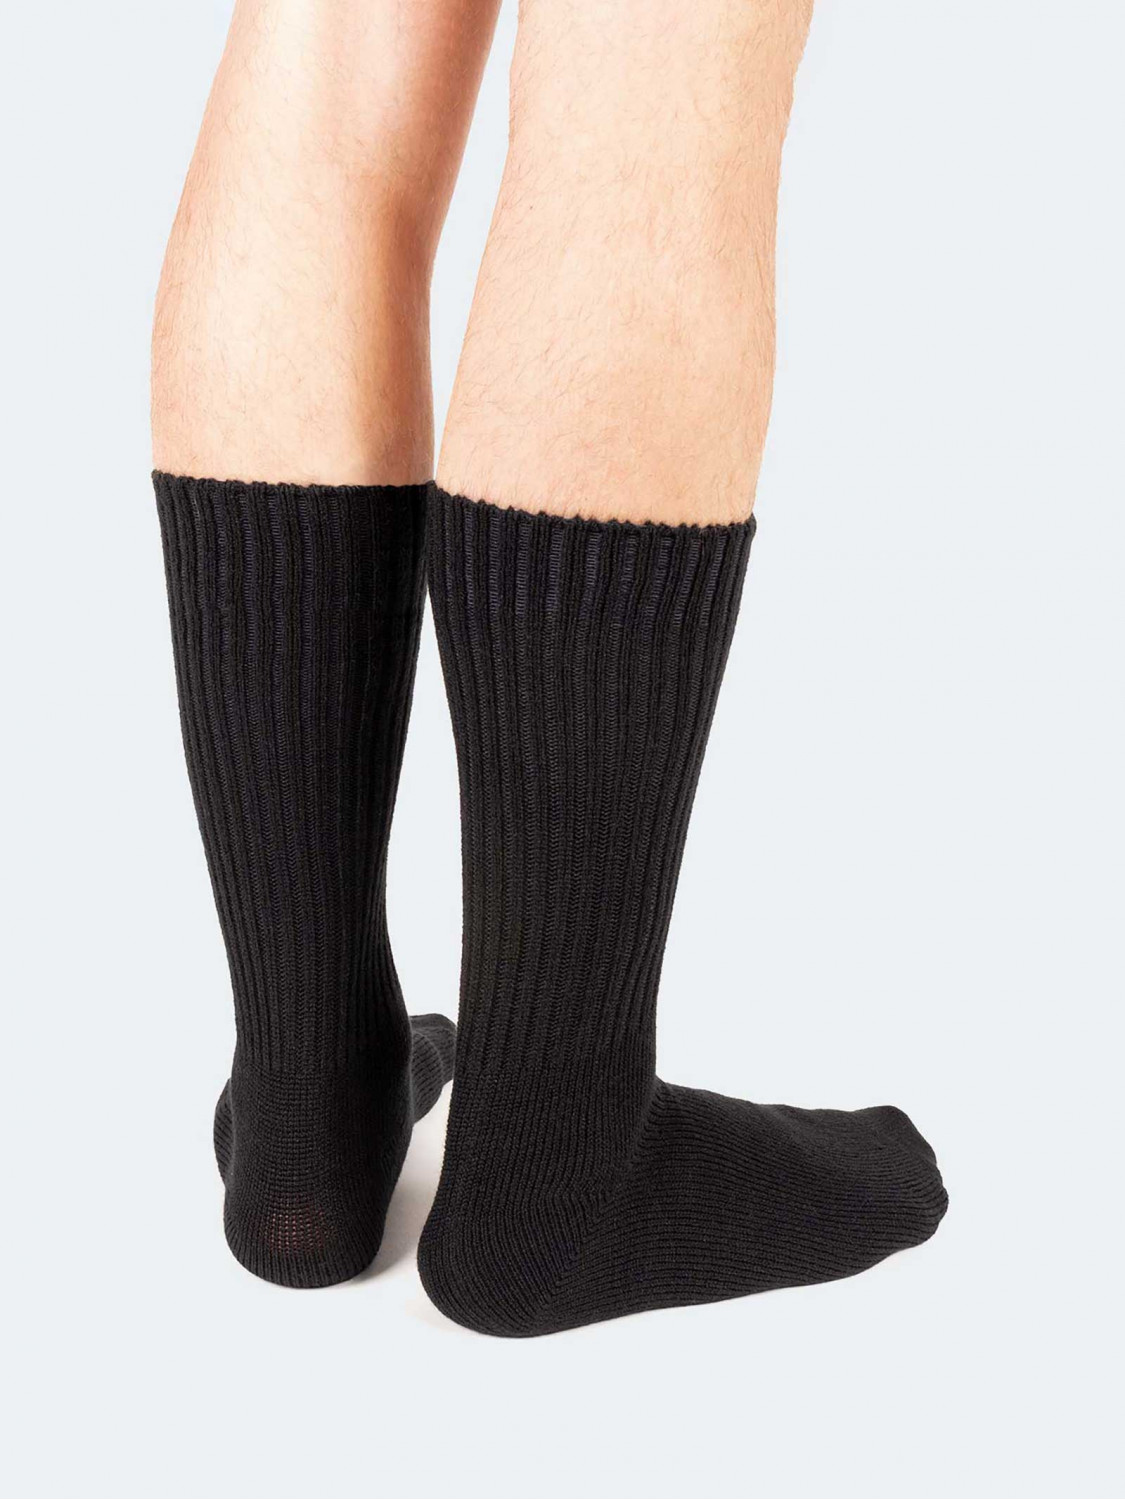 Soft calf socks - Made in Italy